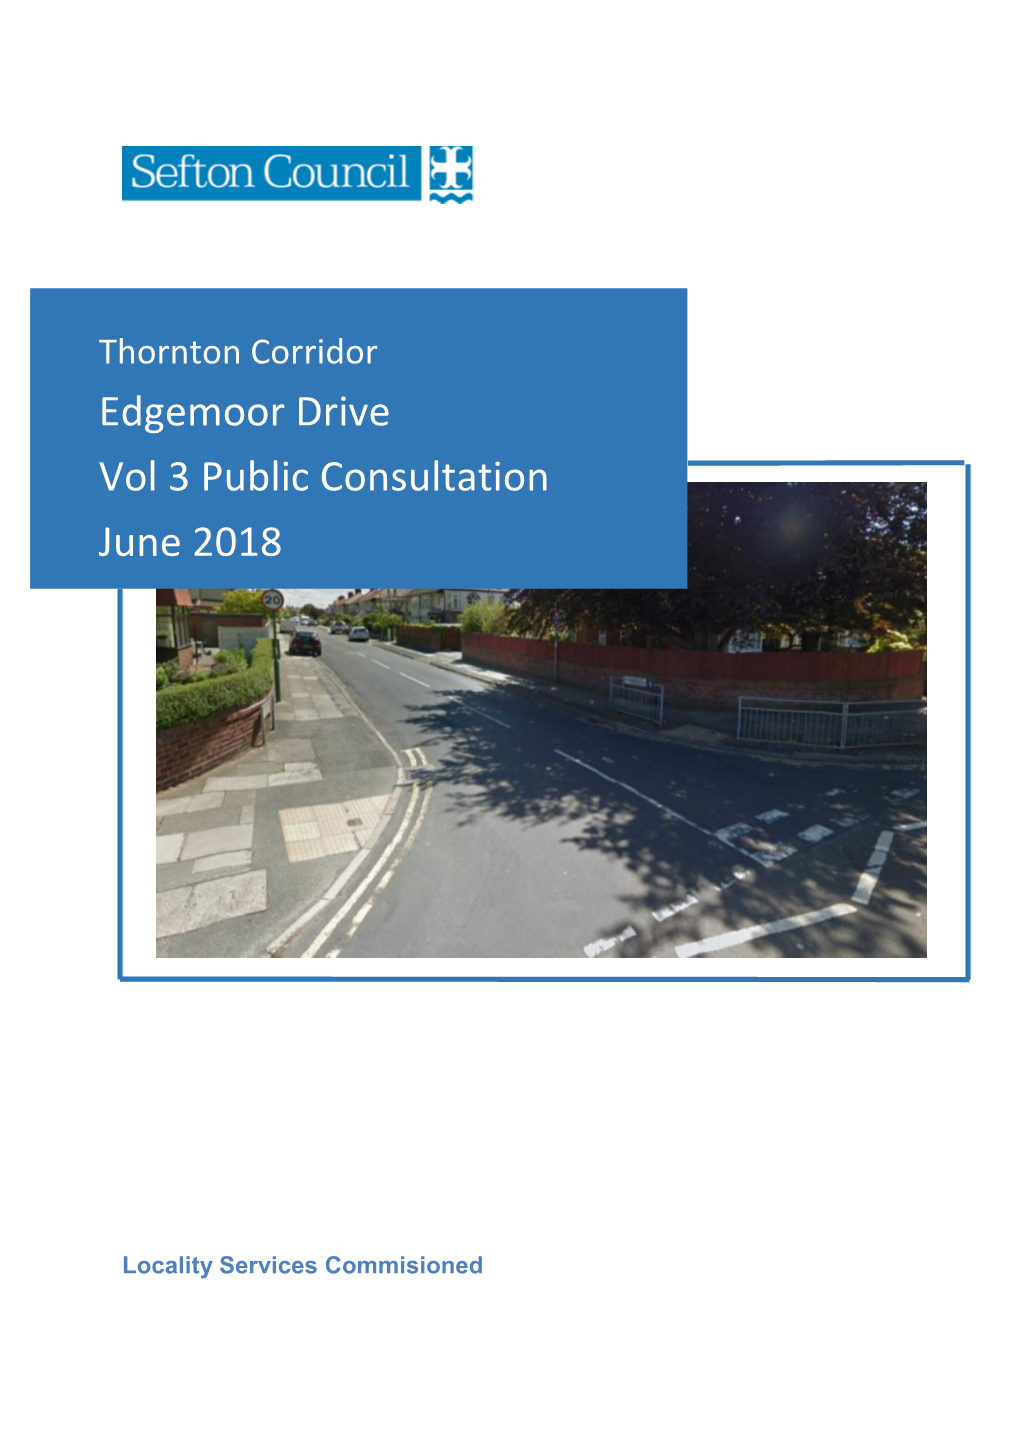 Edgemoor Drive Monitoring